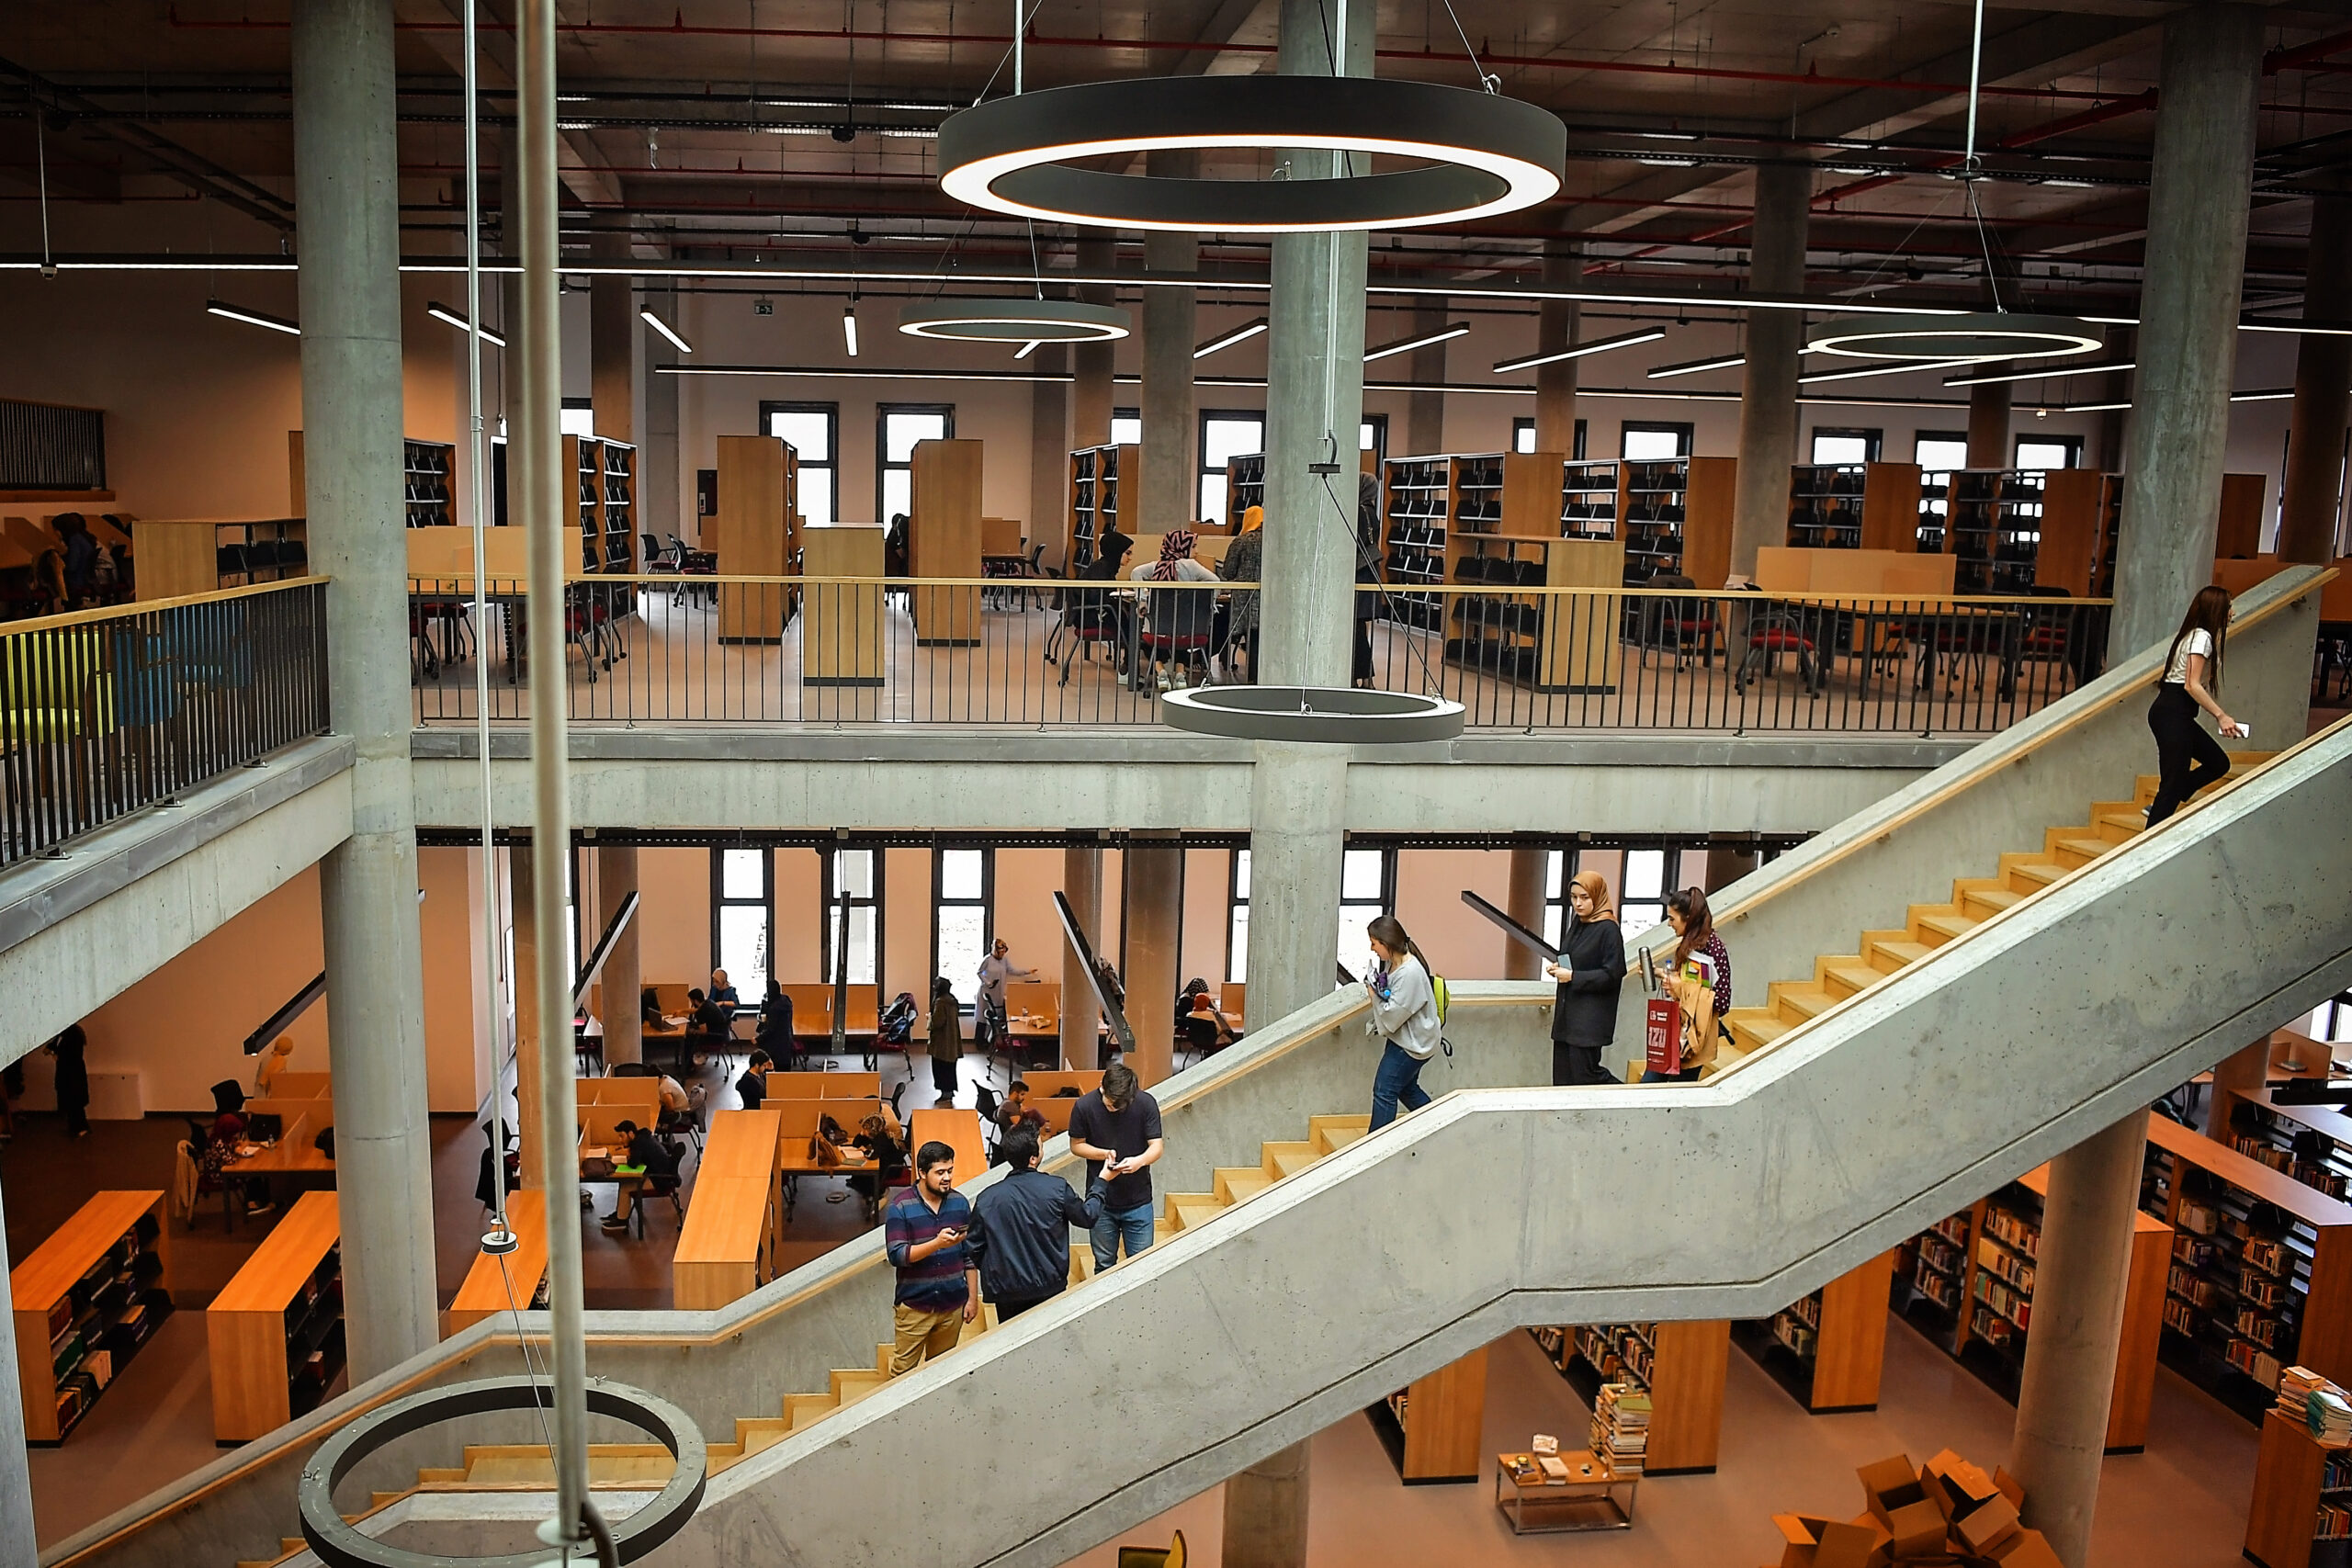 zaim universitesi find and study 8 scaled - İstanbul Sabahattin Zaim Üniversitesi